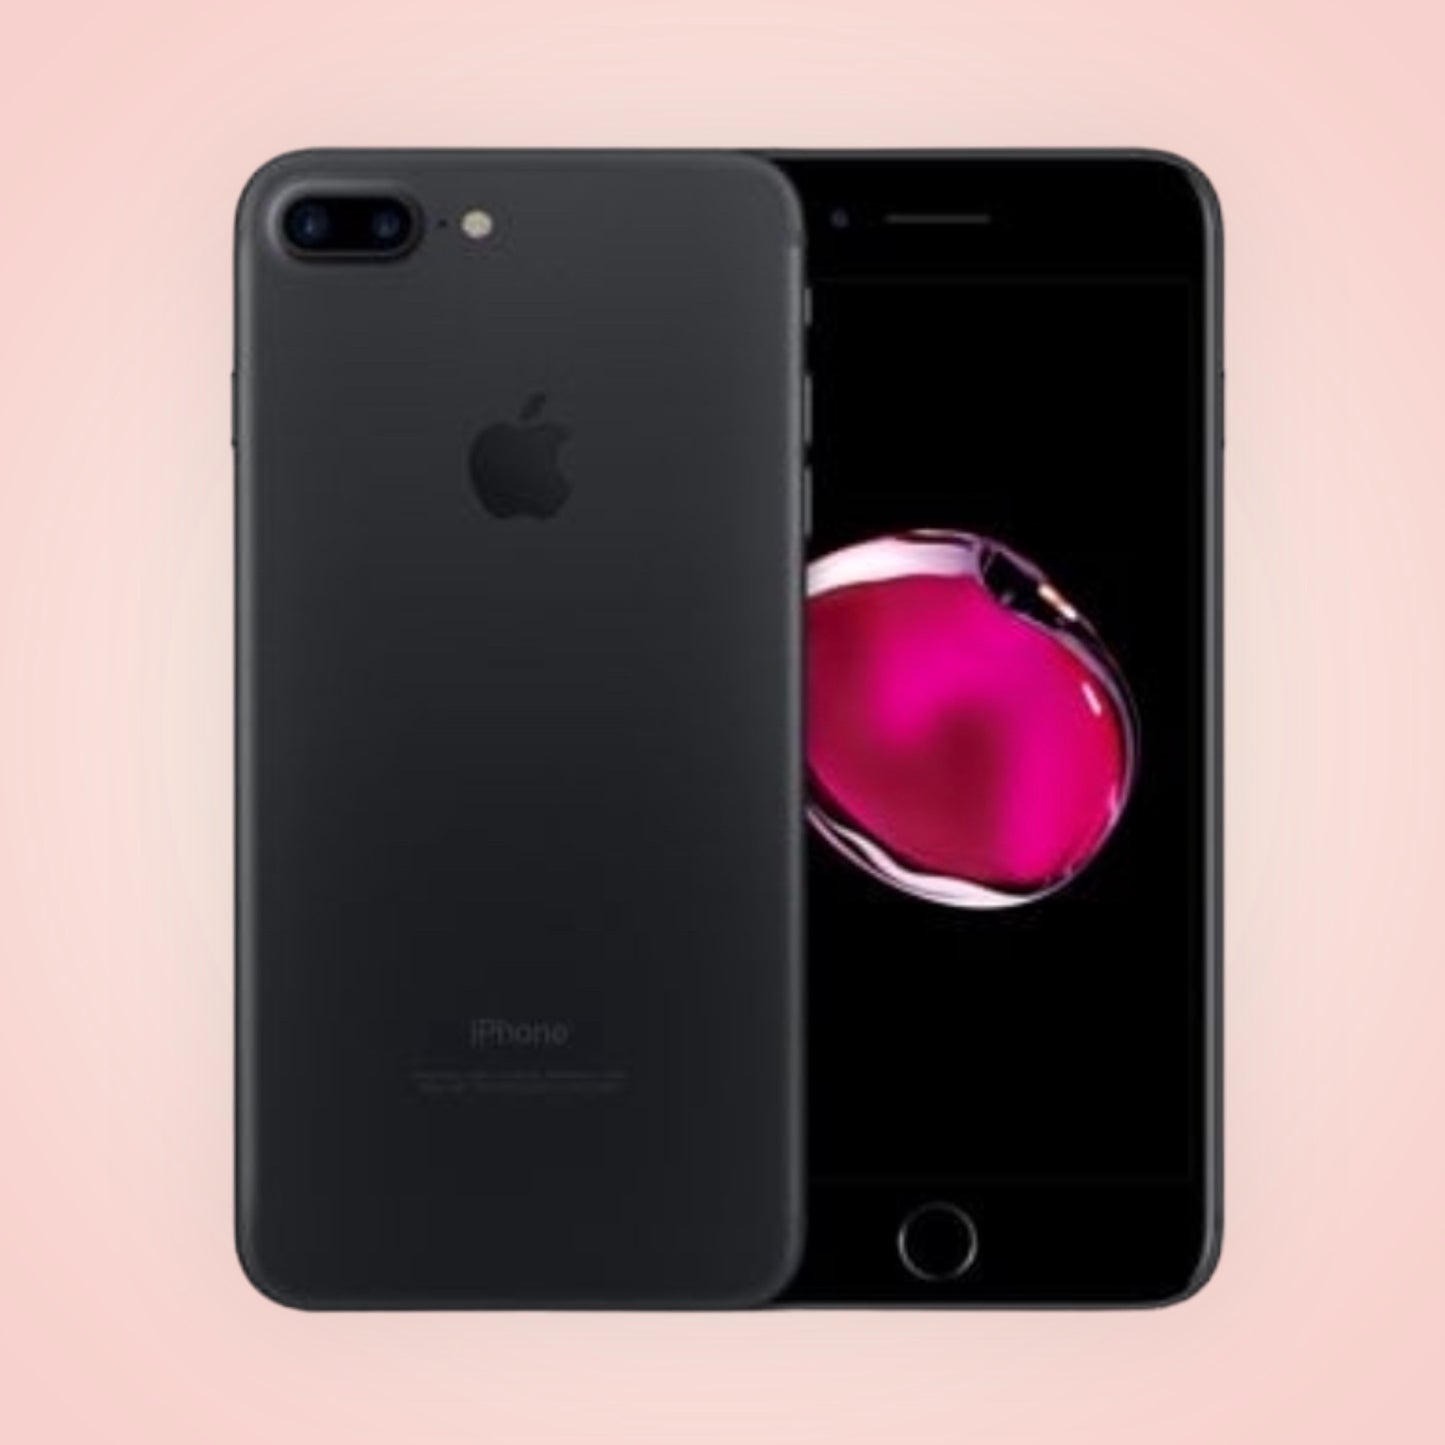 iPhone 7 Plus - Black - 32GB - GSM CDMA Unlocked